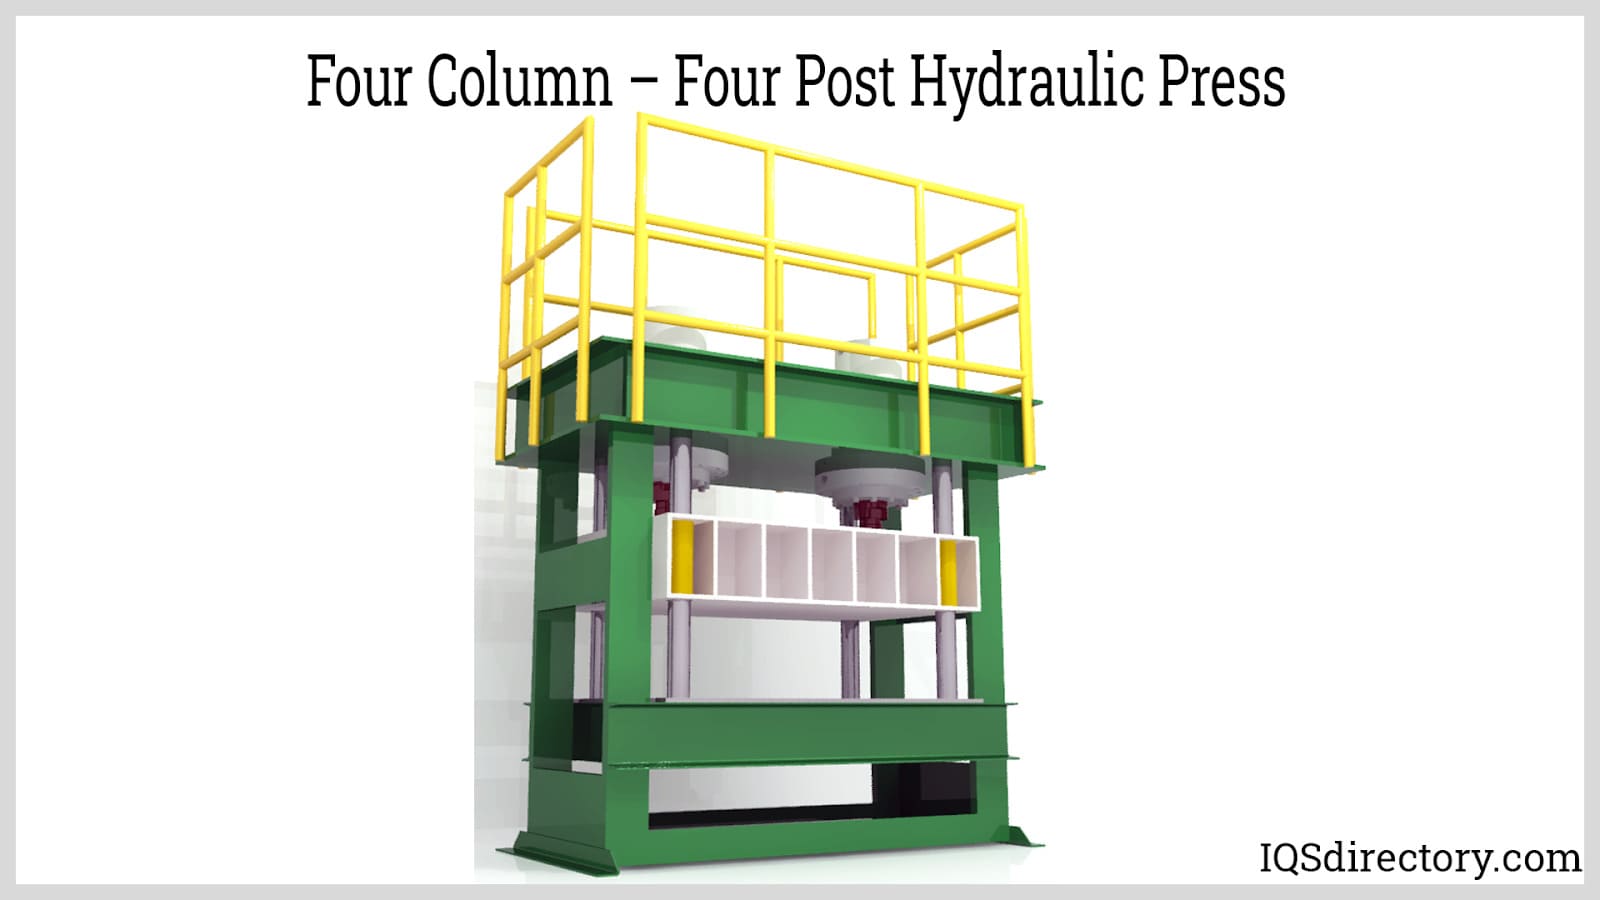 4 column 4 post hydraulic press